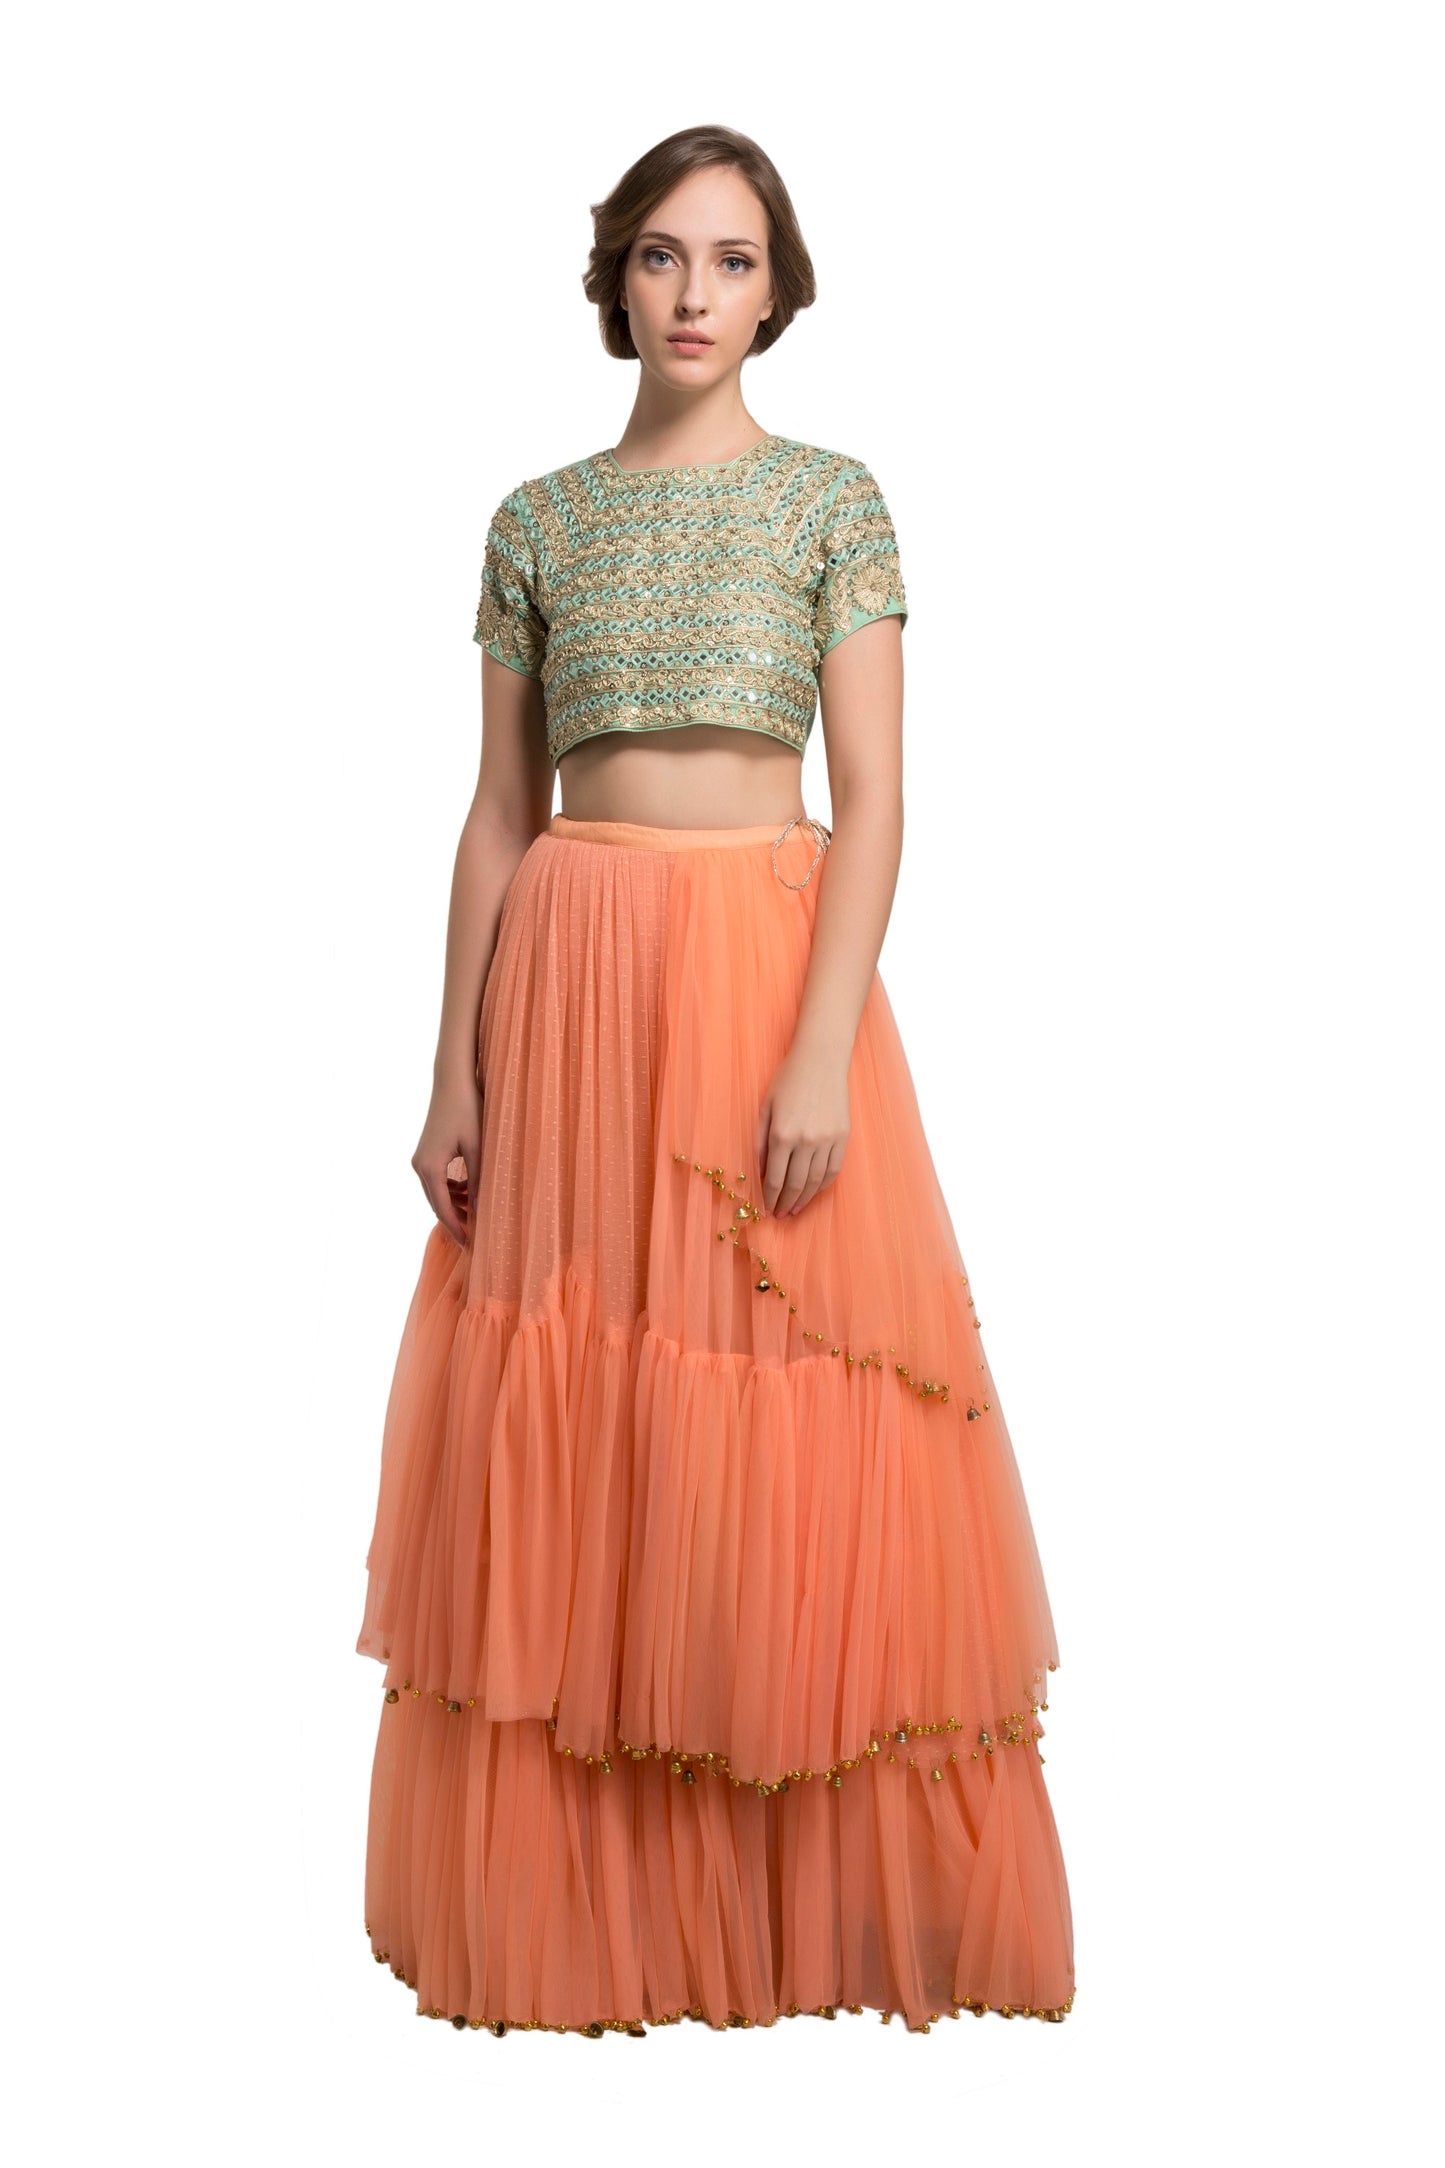 Ghungroo skirt with mirror crop top